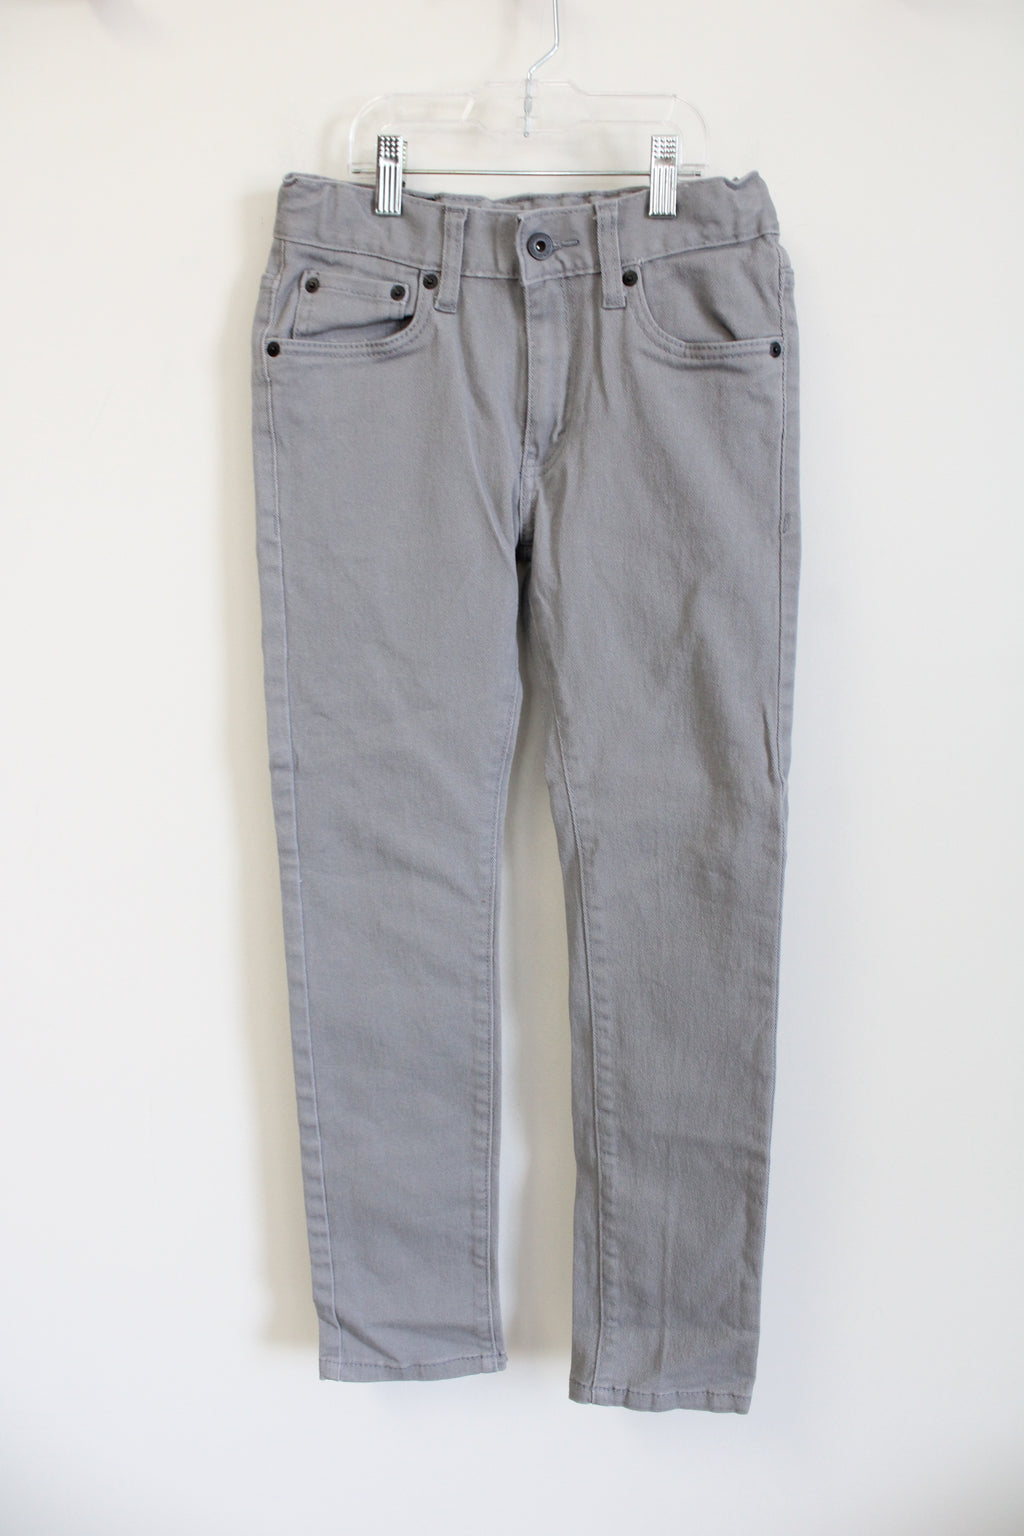 Levi's 510 Skinny Gray Jeans | 12